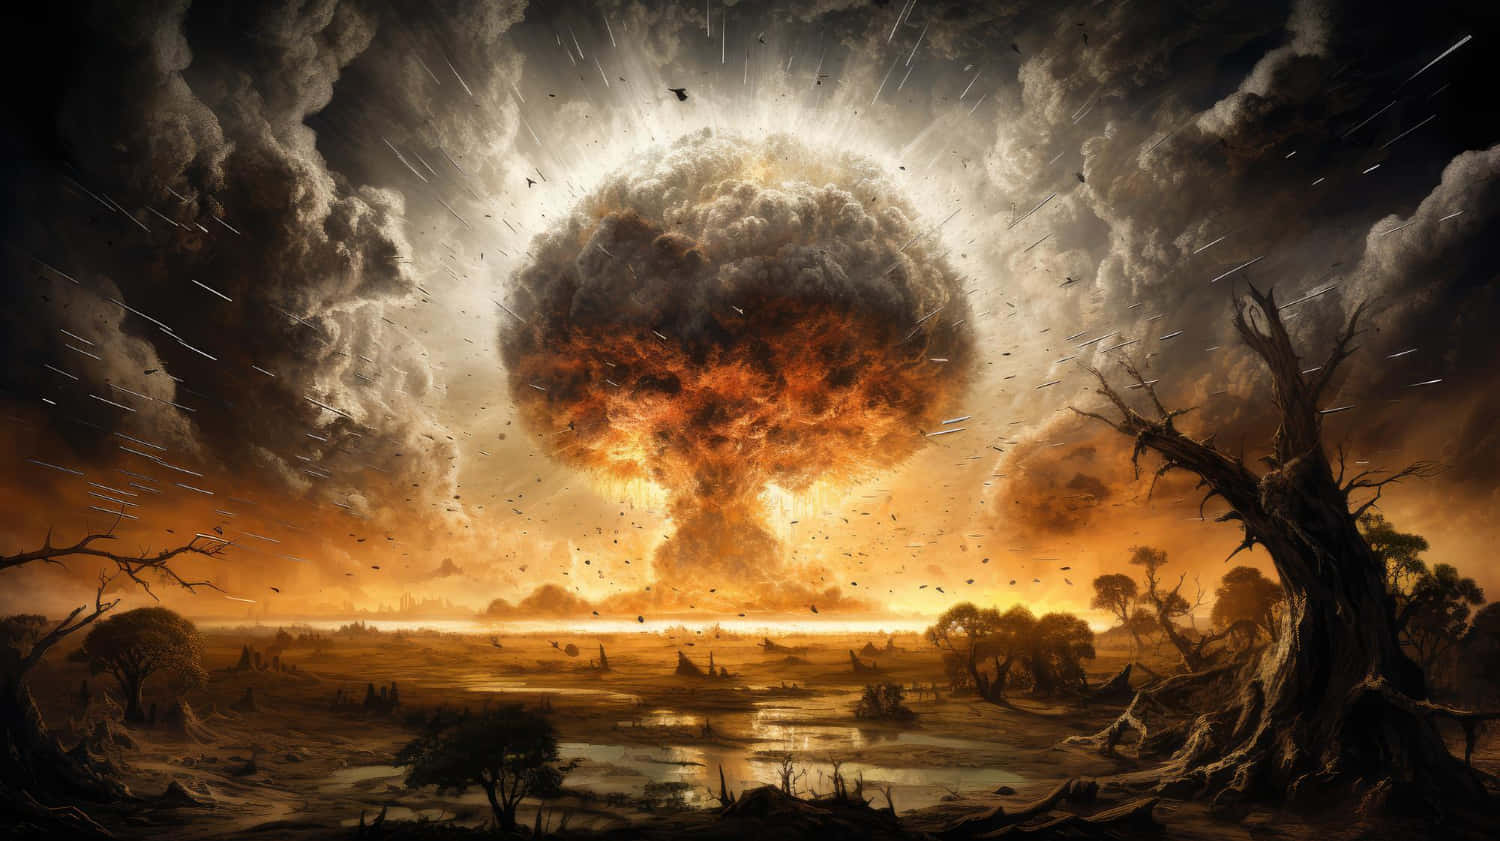 Apocalyptic Nuclear Explosion Artwork